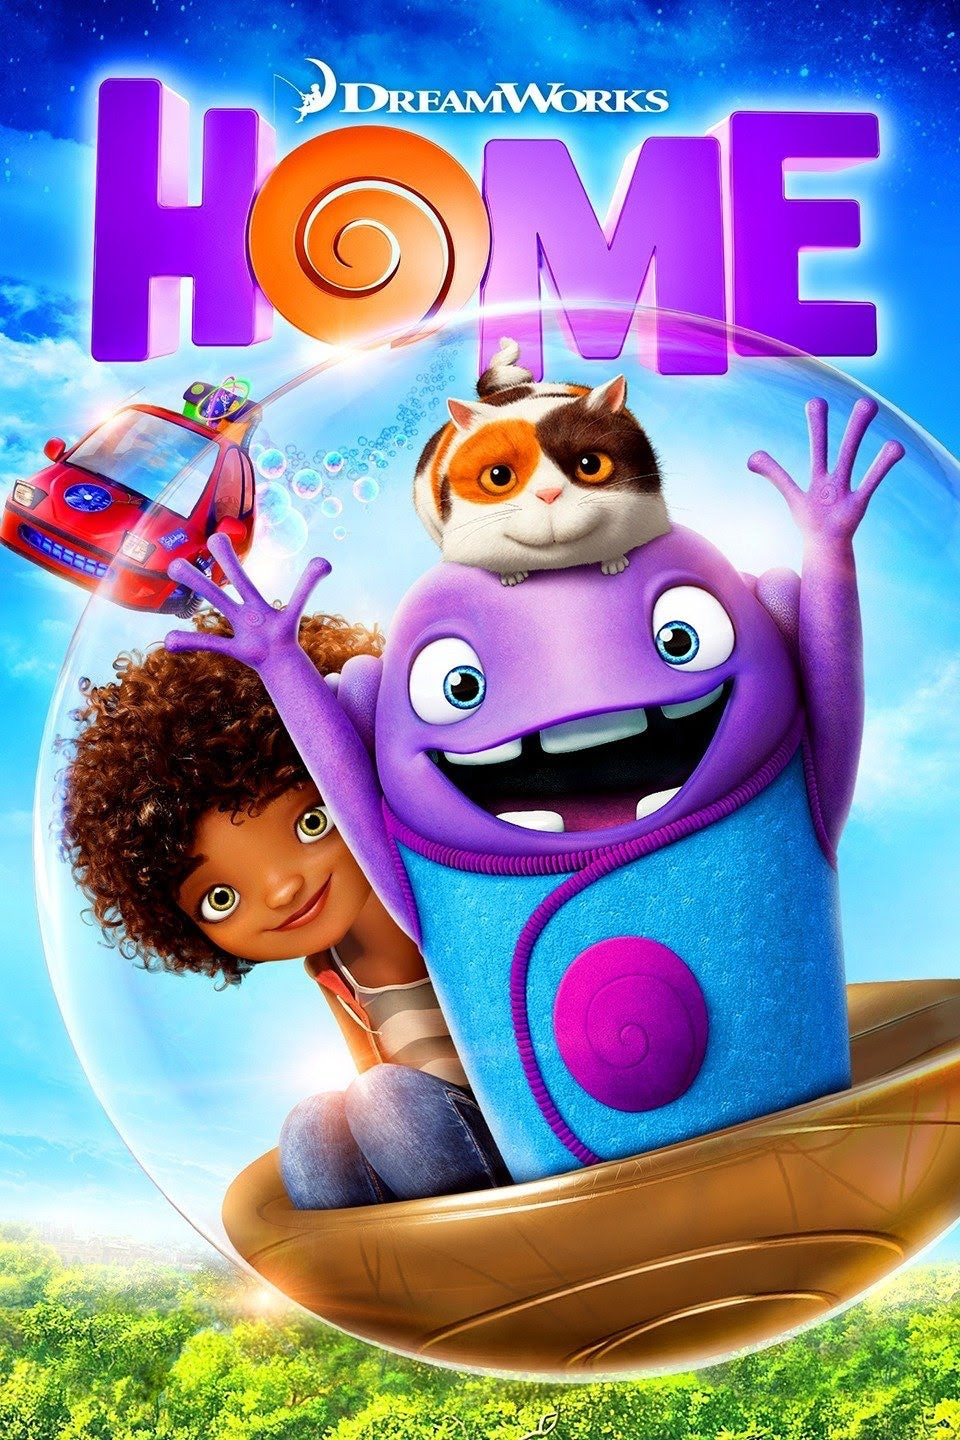 Home (2015) Movies Anywhere HD code